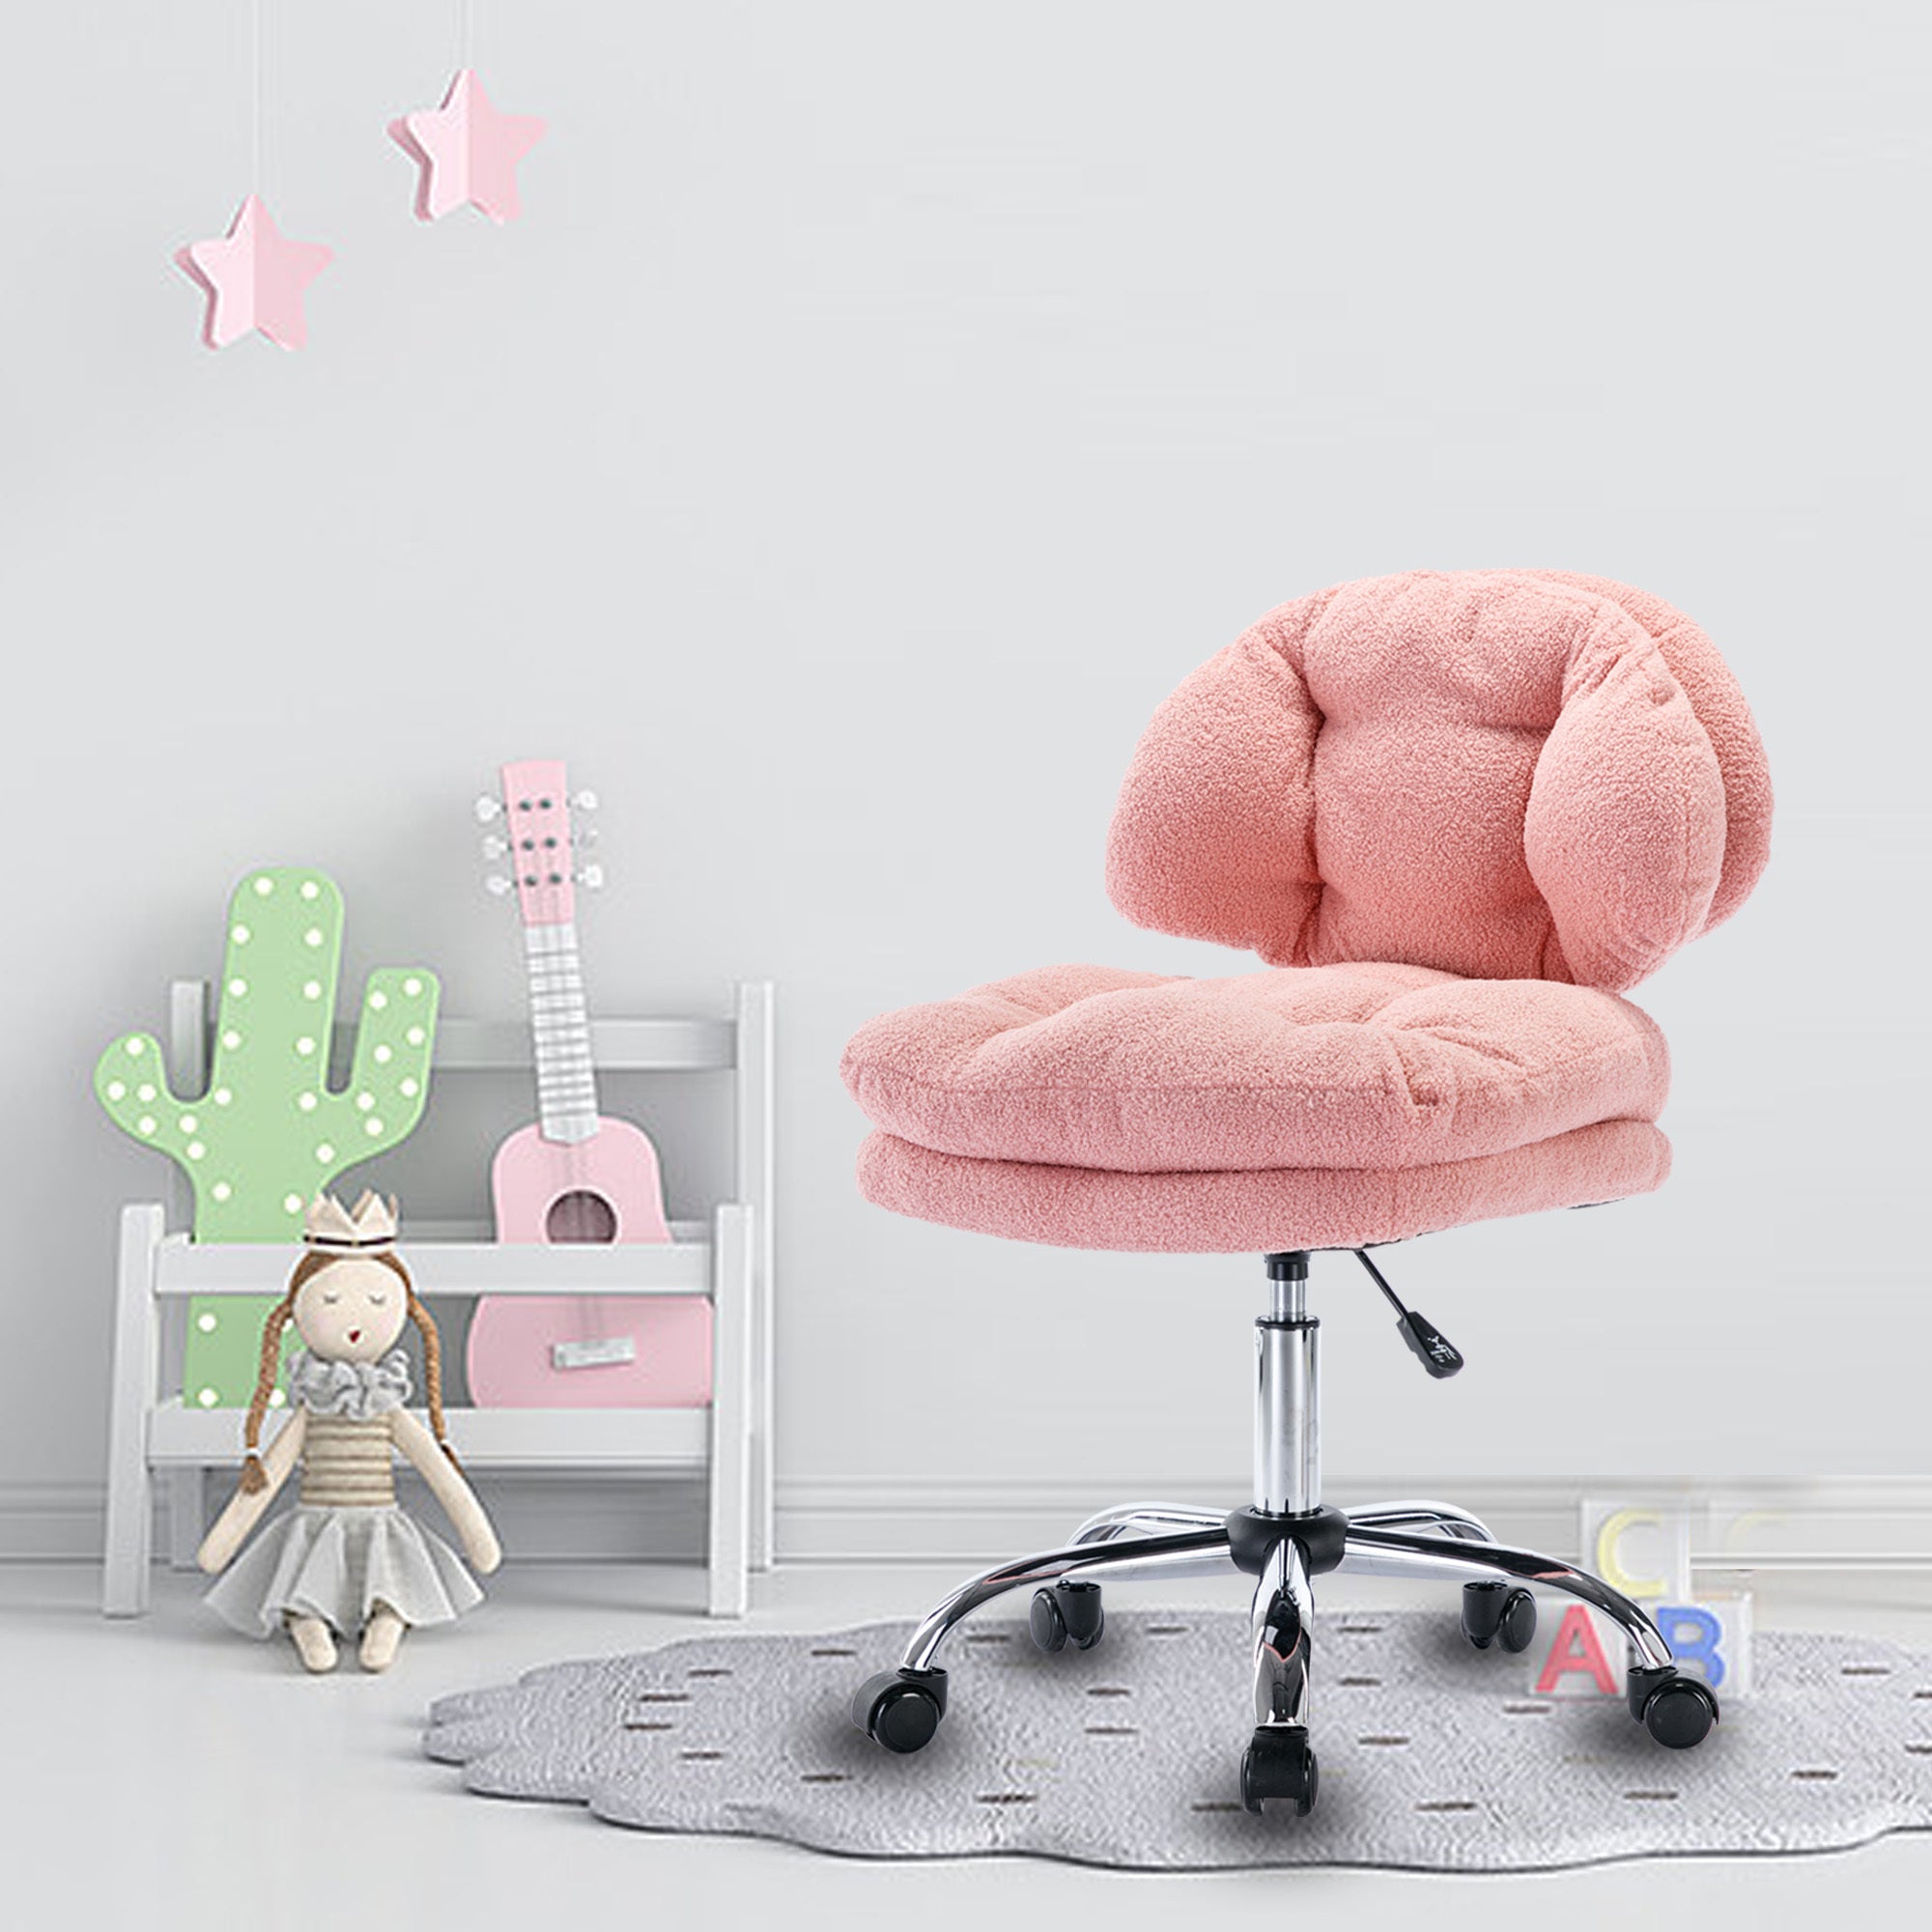 Teddy Velvet Pink Home Office Chair Bling Desk Adjustable Height Rolling Wheels - Pink